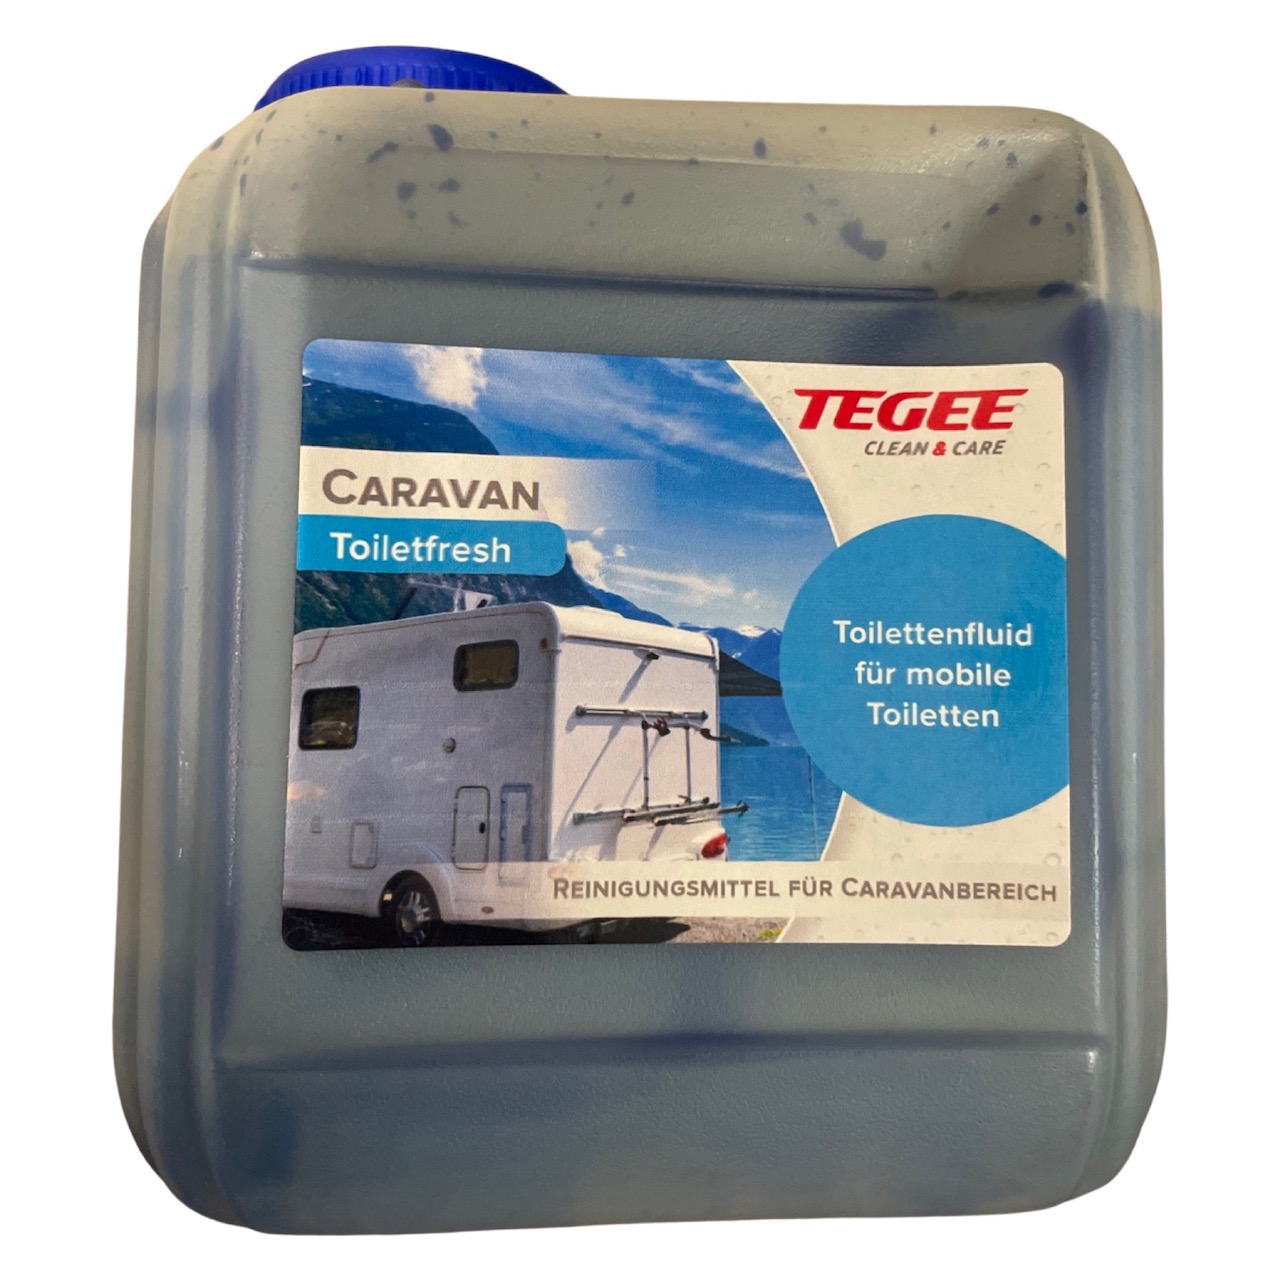 Tegee Caravan Toiletfresh 1 Liter